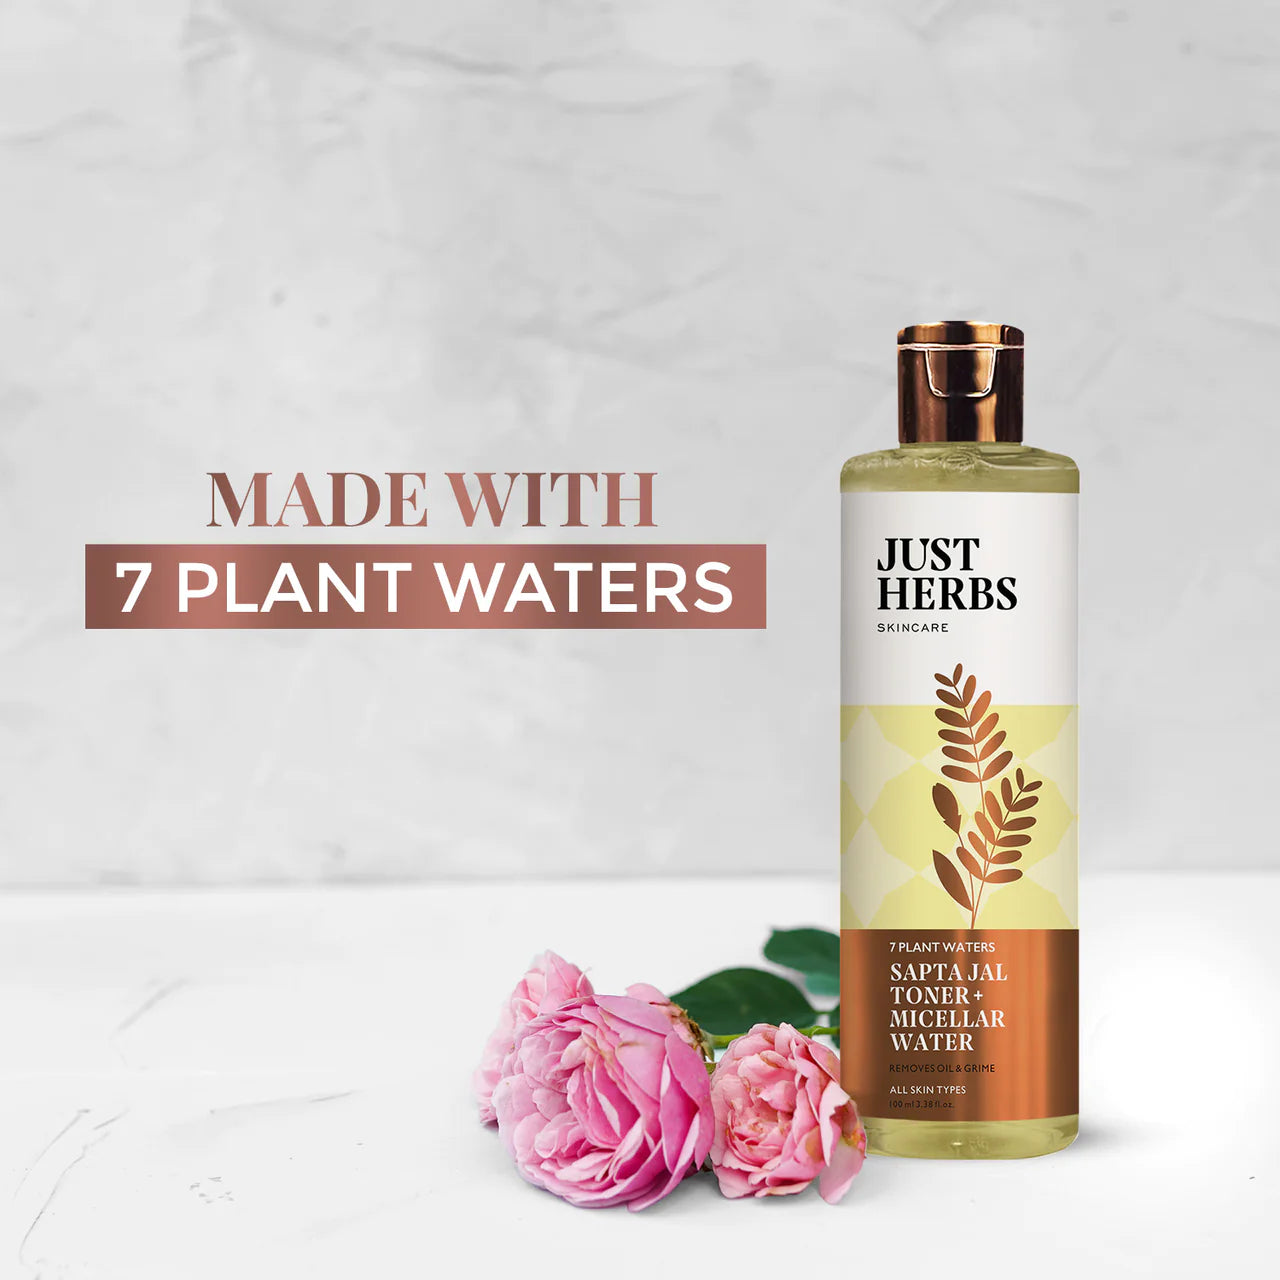 Just Herbs Sapta Jal Toner Micellar Water: 7 Plant Waters